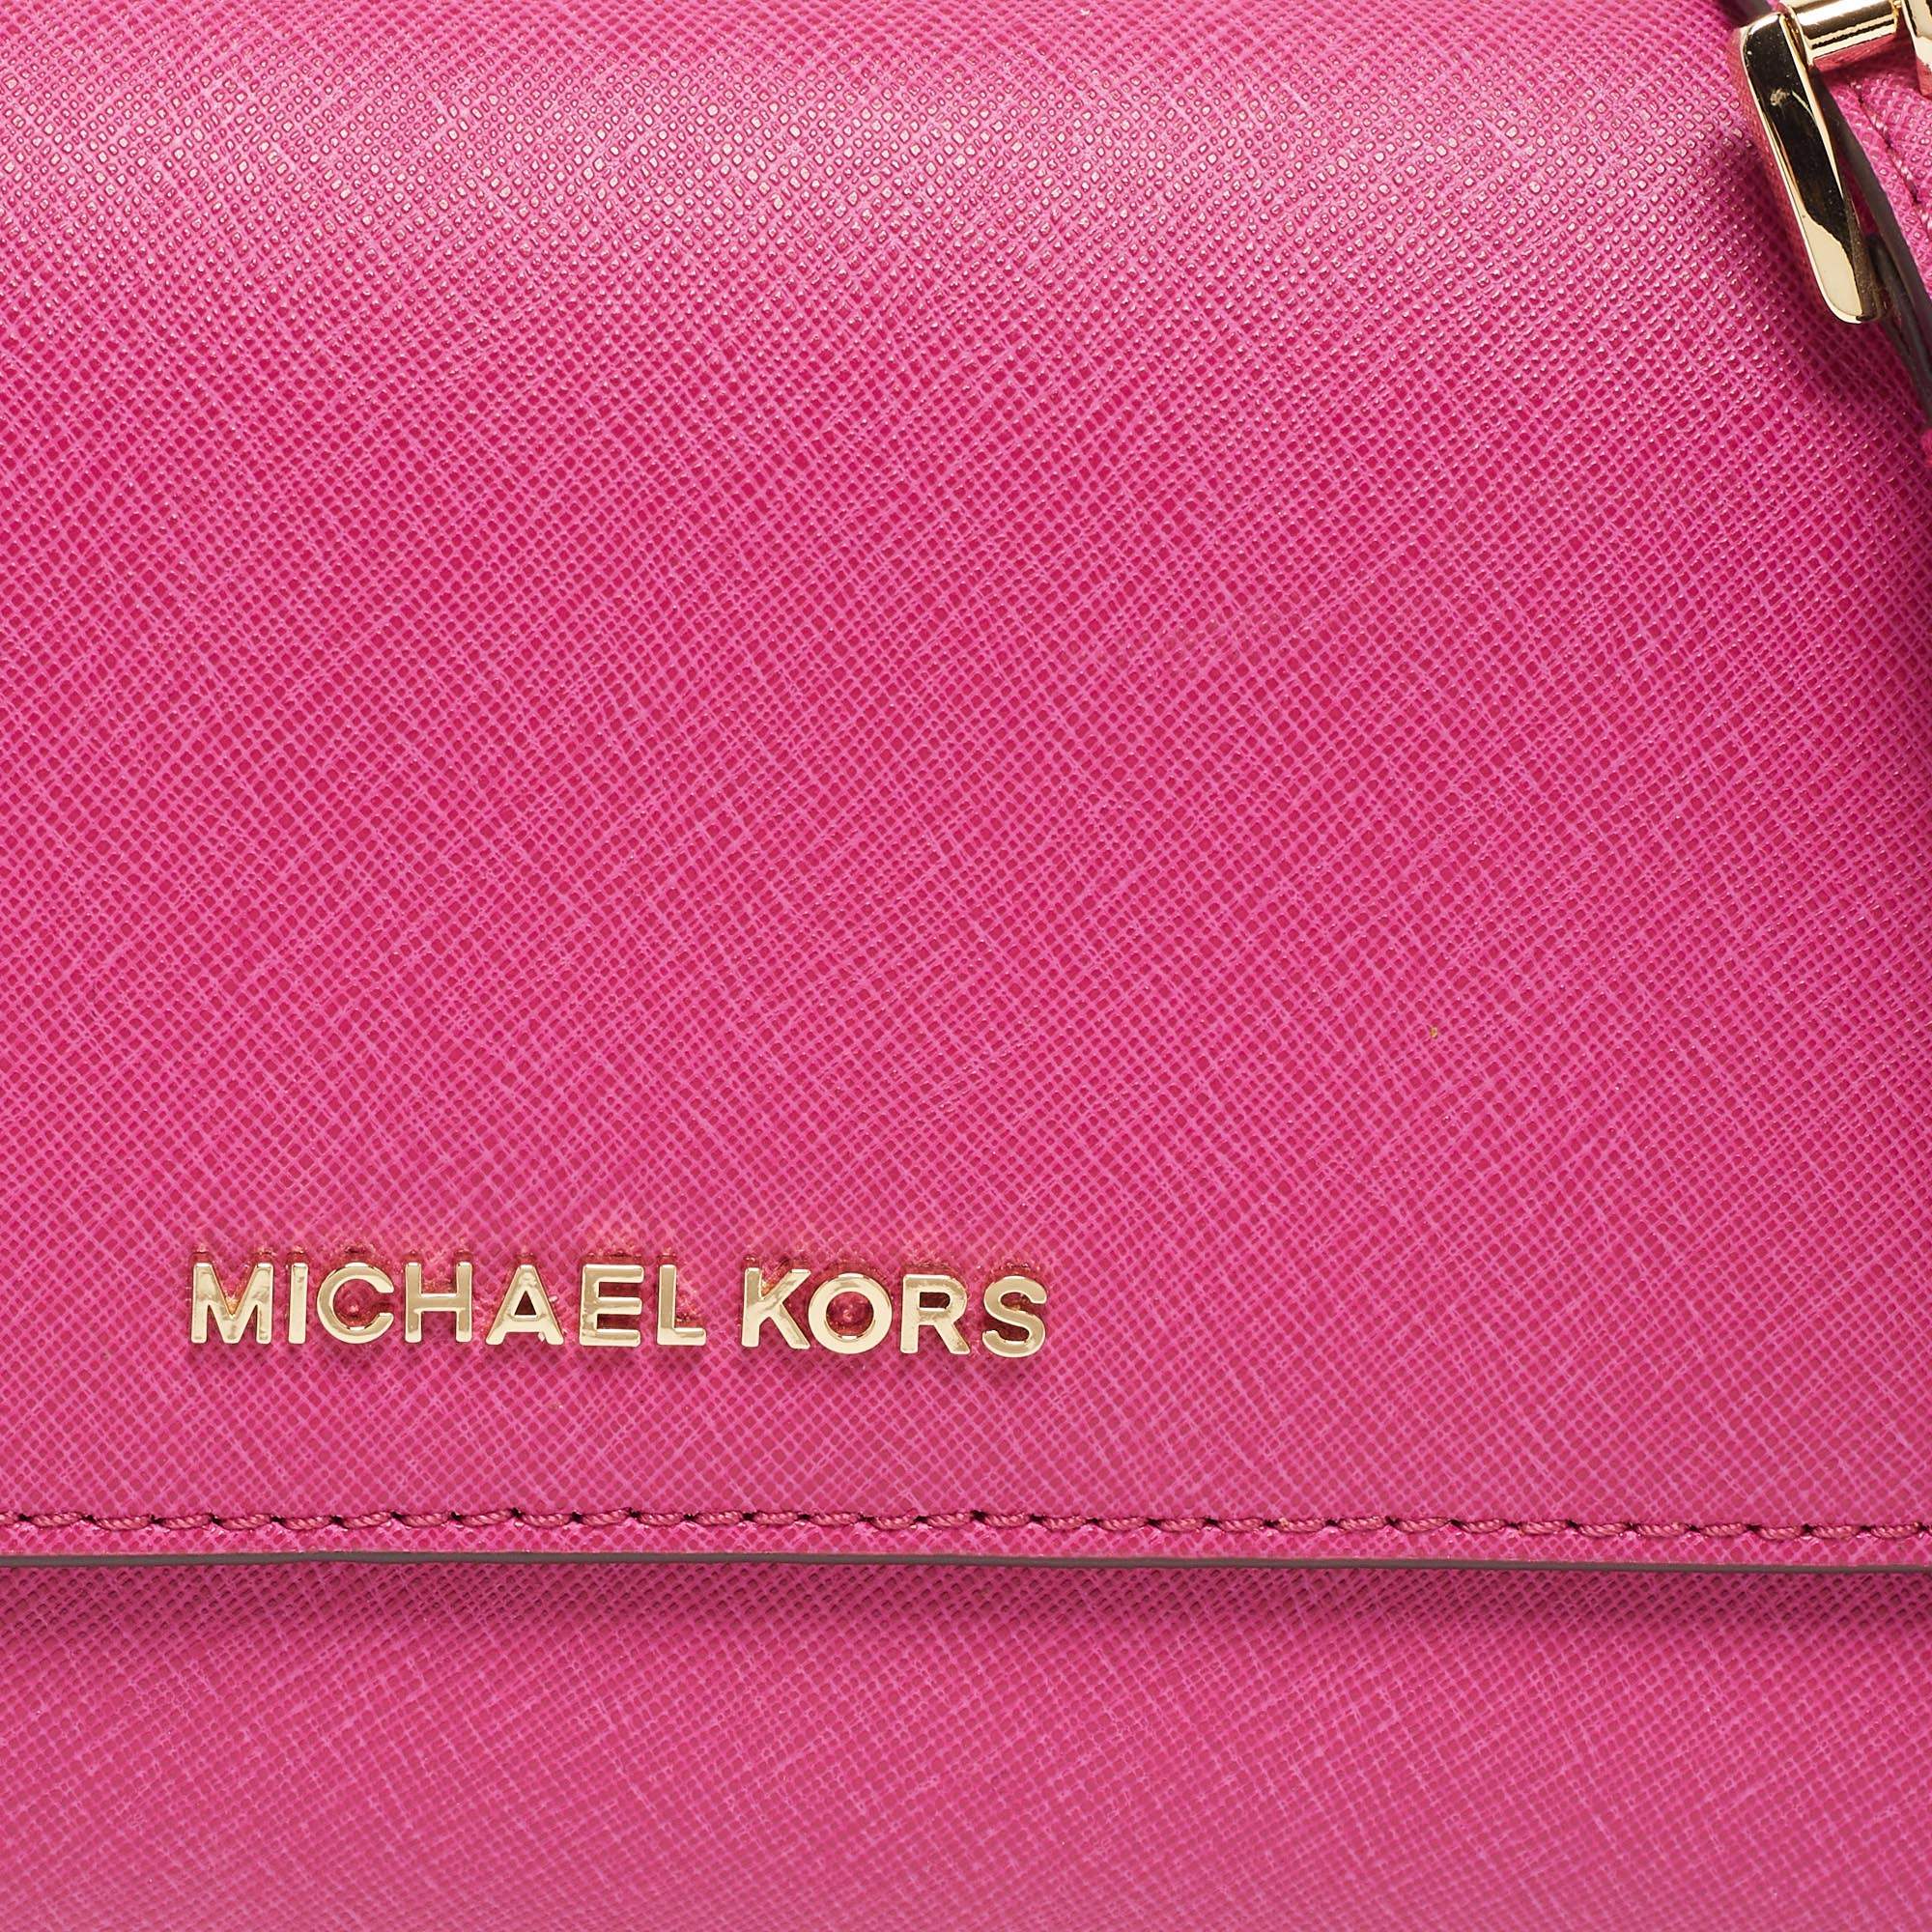 Michael Kors Pink Saffiano Leather Flap 3in1 Crossbody Bag Michael Kors